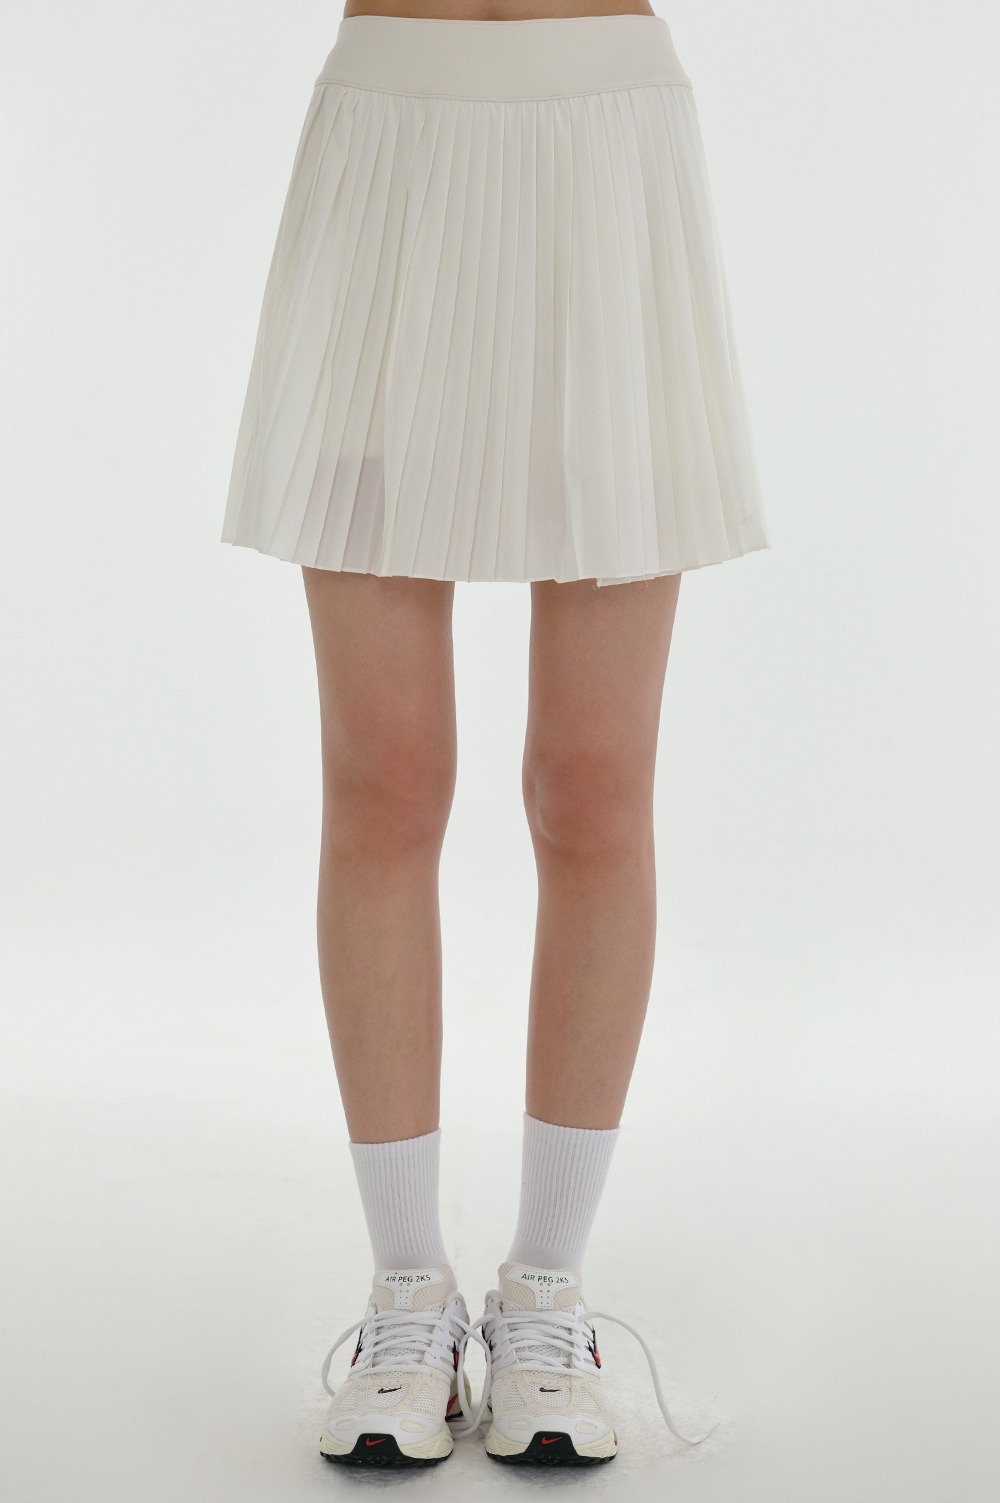 clove - [4/29(월) 예약배송][24SS clove] Wrap Tennis Skirt (Cream)